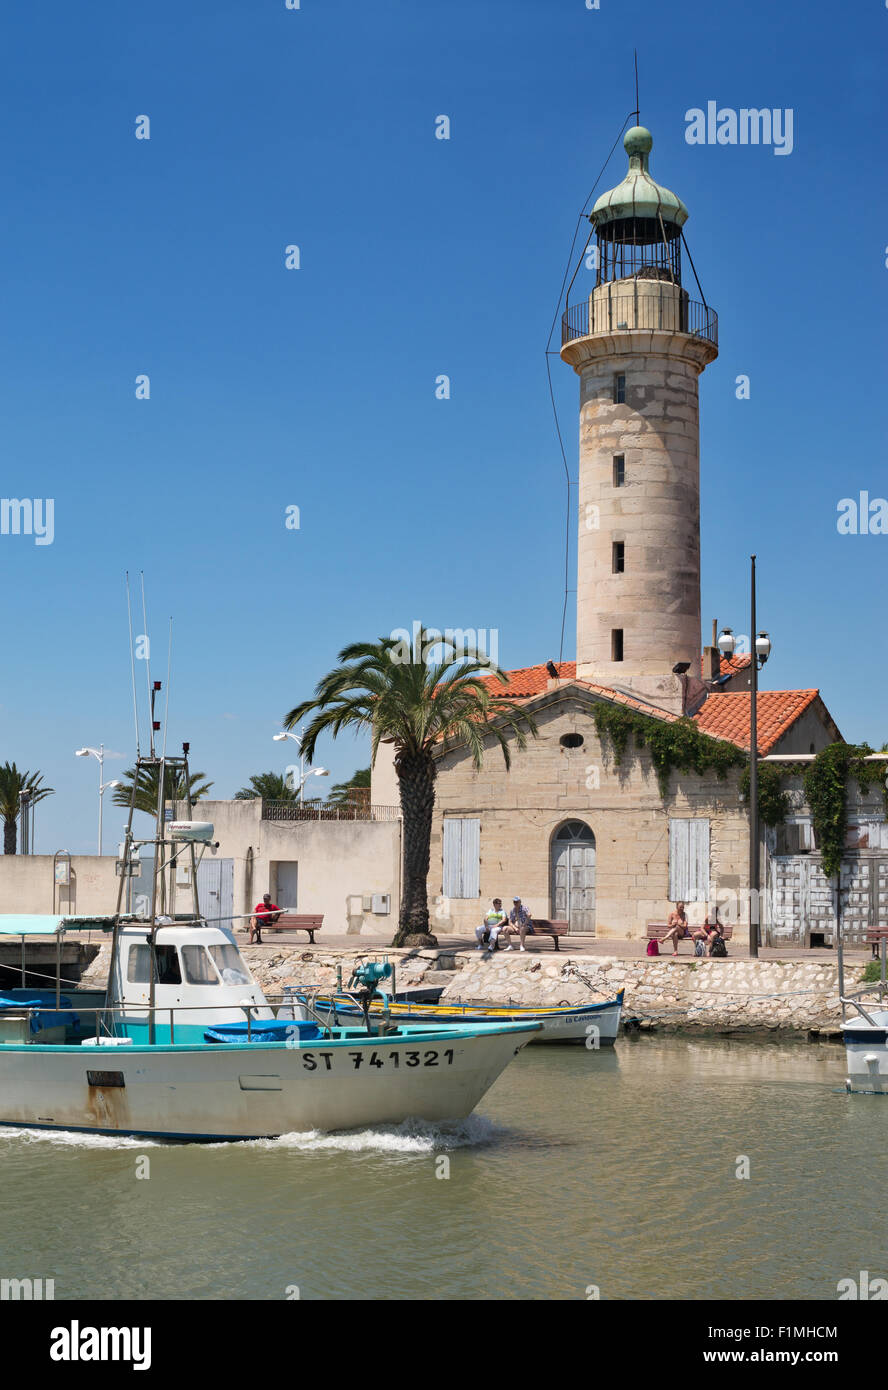 Fishing boat passing lighthouse, Le Grau-du-Roi, Languedoc-Roussillon, France, Europe Stock Photo